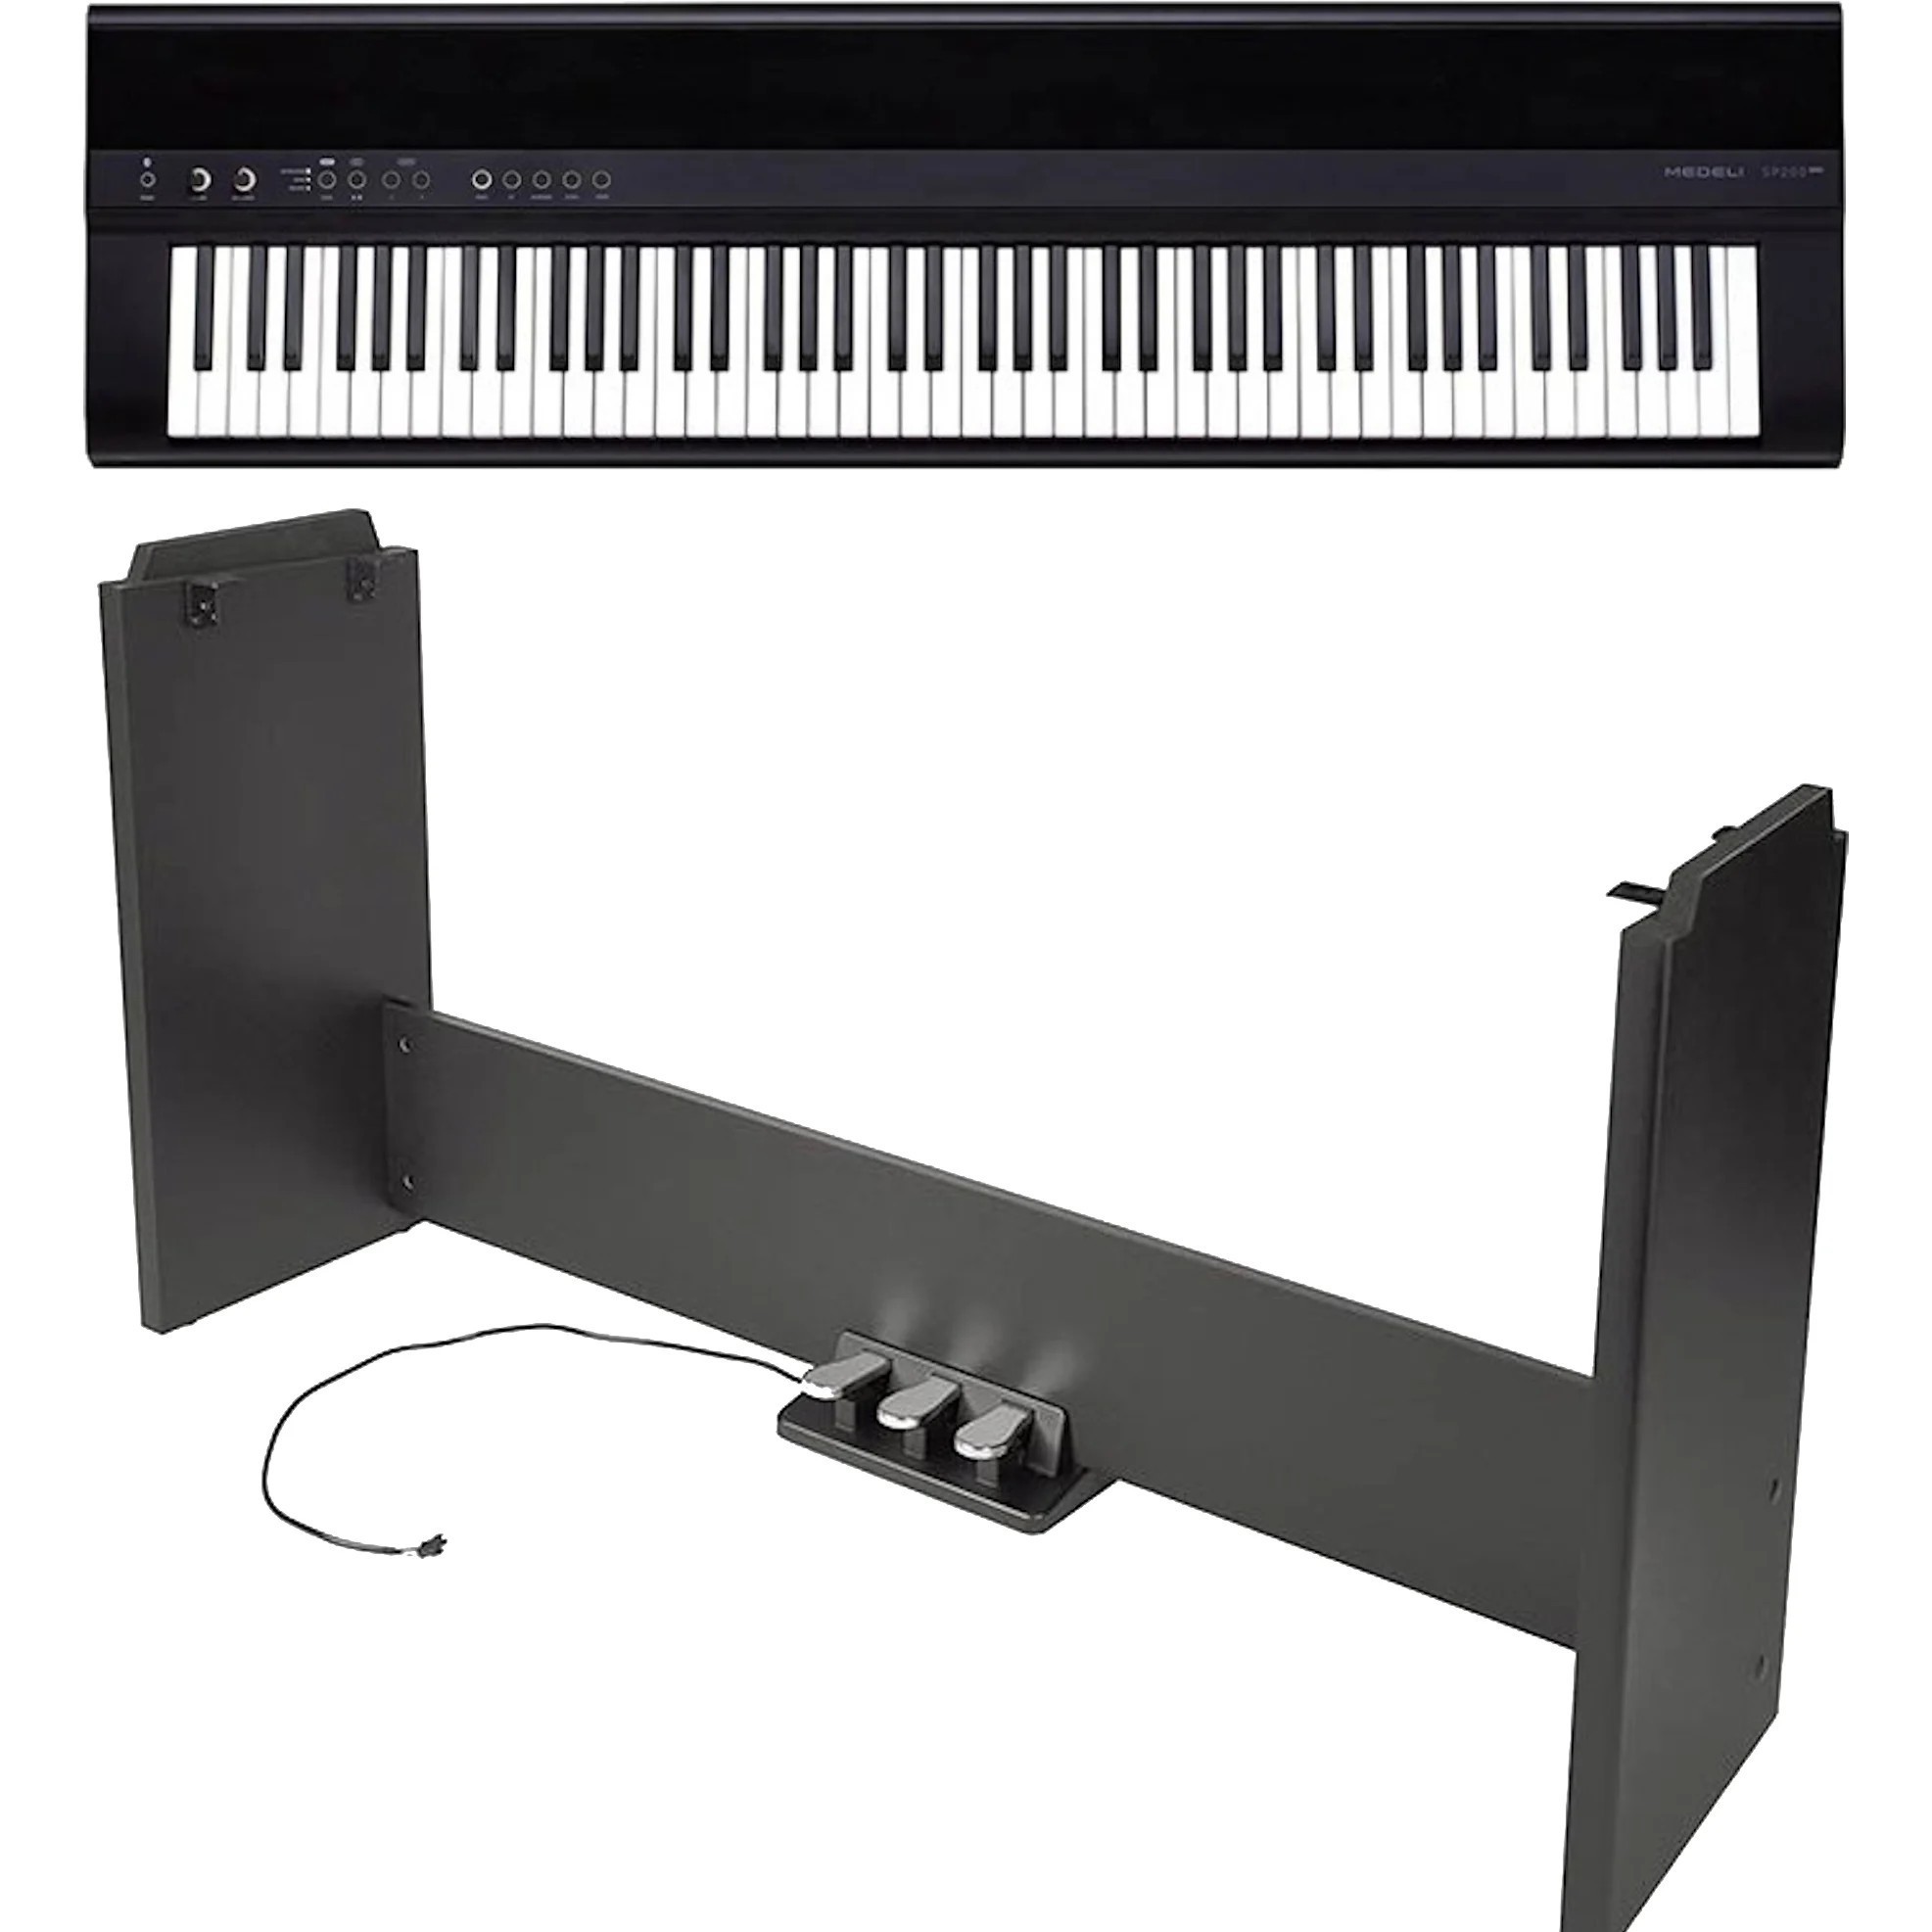 Цифровое пианино Medeli SP201plus-BK+stand